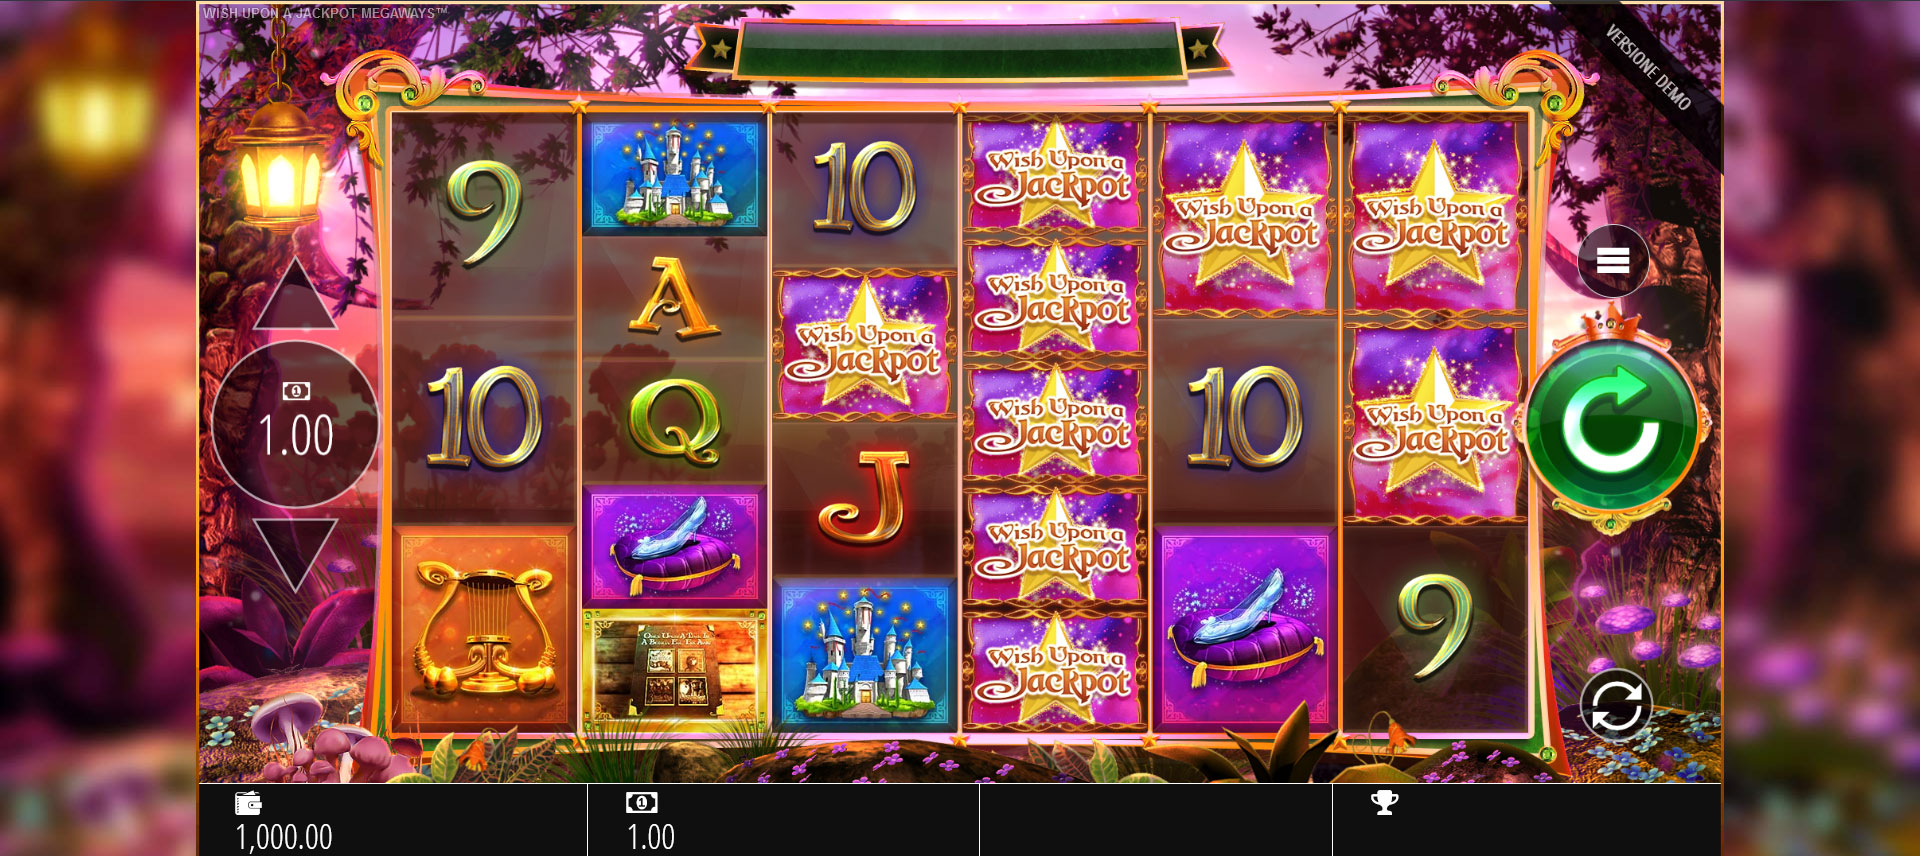 schermata della slot machine Wish Upon a Jackpot Megaways